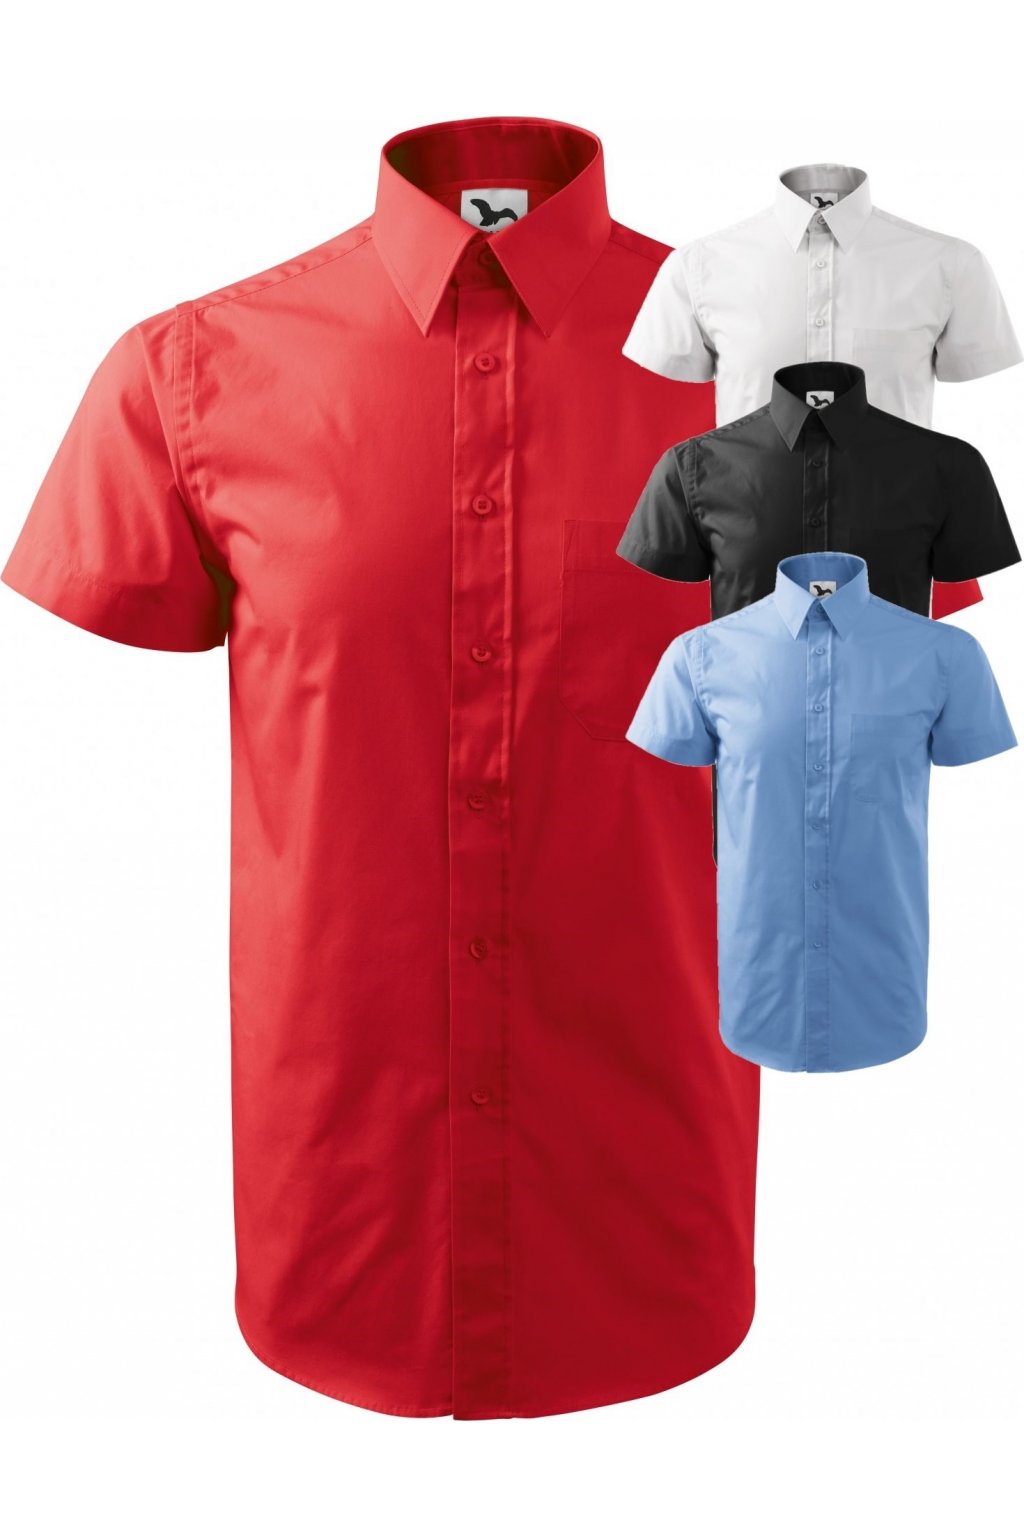 Košile Malfini (Adler) - Pánské košile Malfini - TEXTIL MALFINI -  SPECIALIZOVANÝ E-SHOP